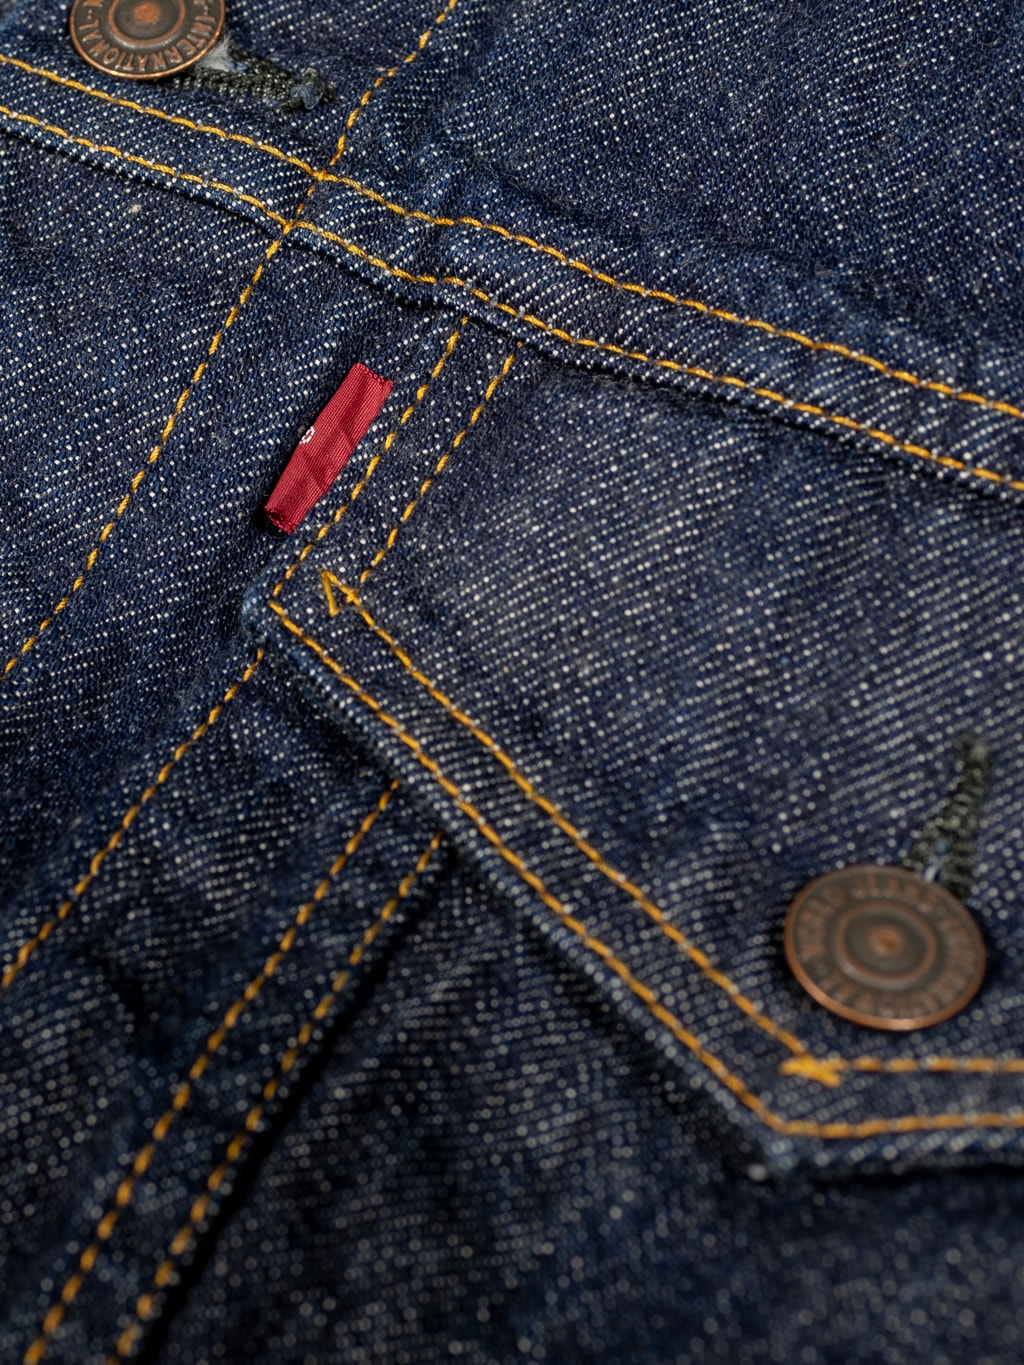 tcb jeans 60s type 3 denim jacket red tab